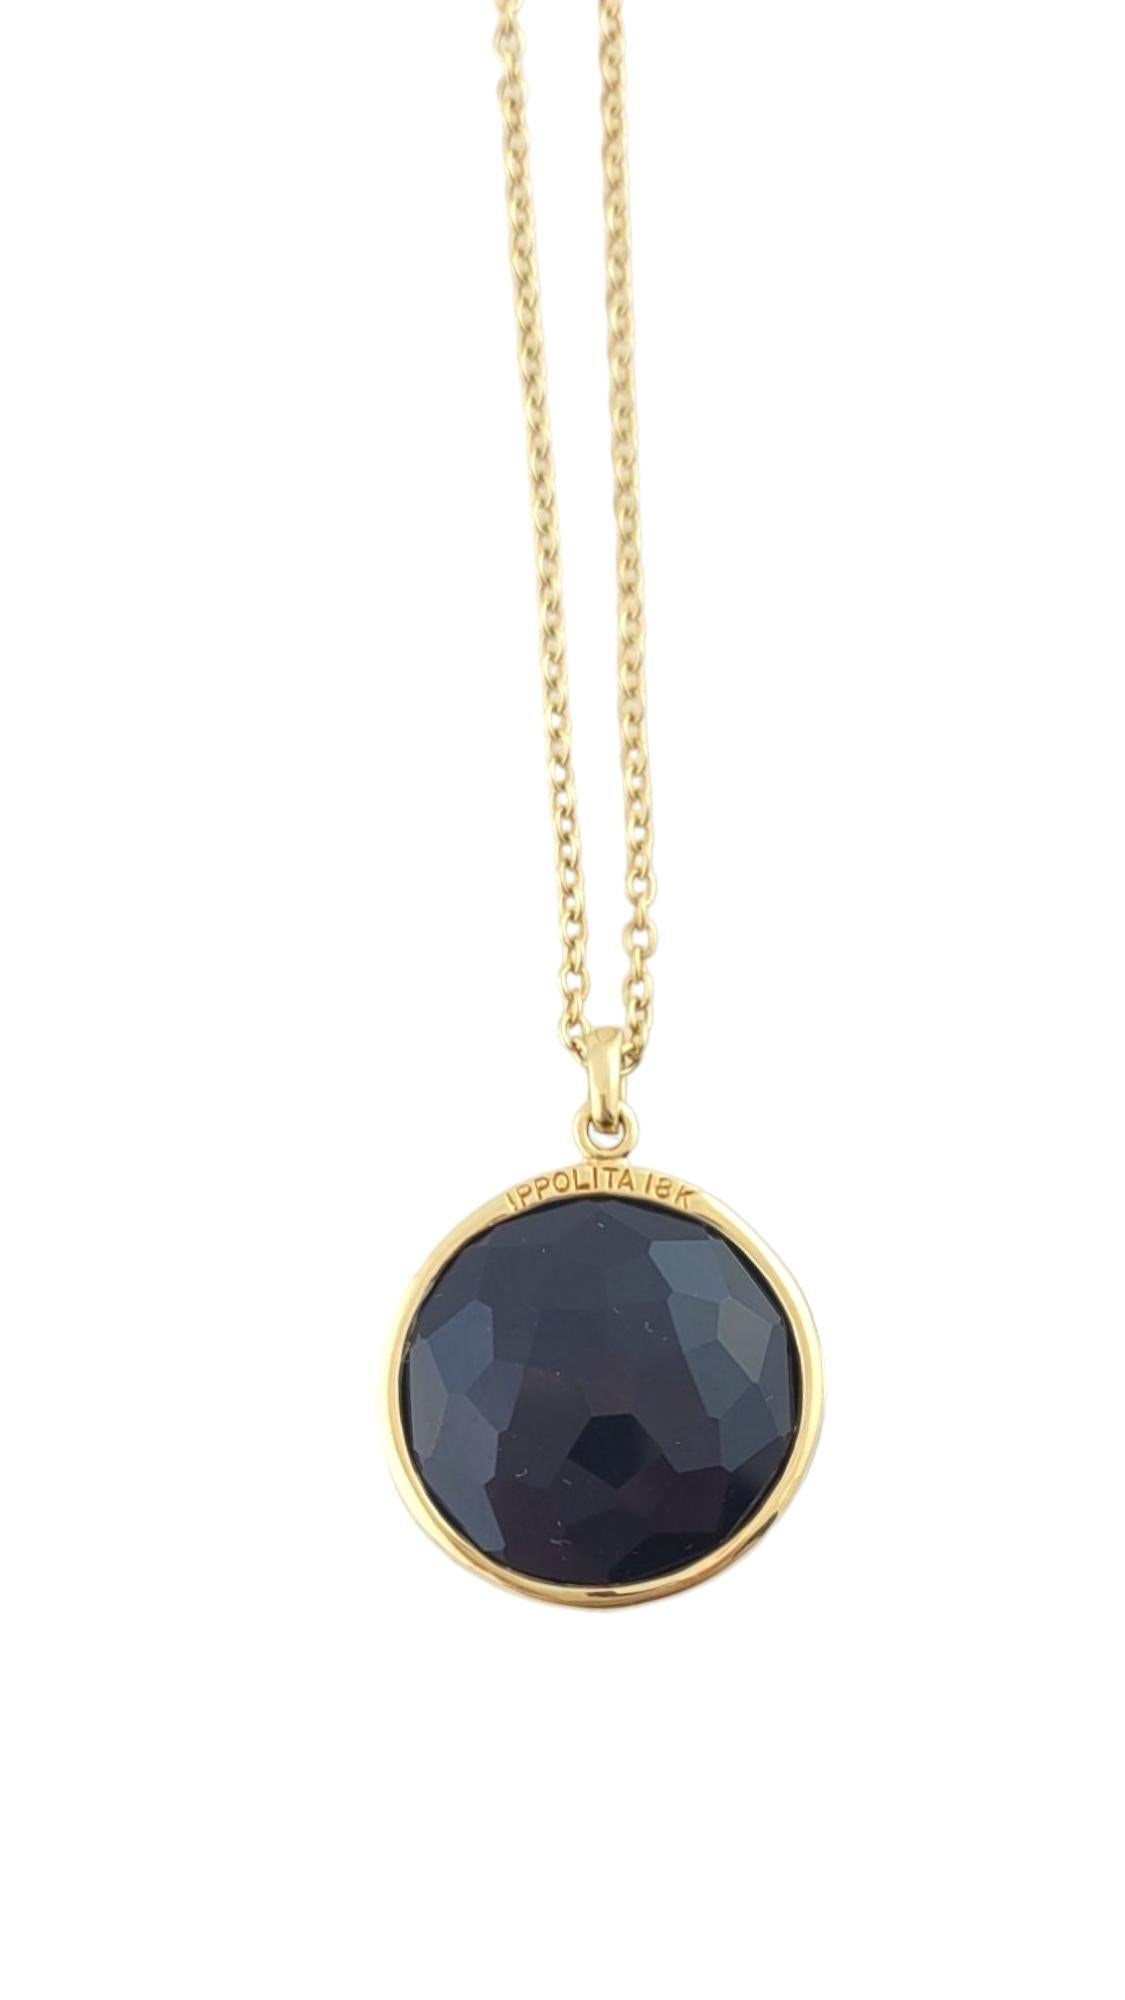 Ippolita 18K Yellow Gold Rock Candy Lollipop Black Onyx Necklace

Black onyx pendant with 18 karat yellow gold chain.

Hallmark: IPPOLITA 18K

Weight: 7 g/ 4.5 dwt.

Chain Length: 18 in.

Measurements of pendant: 25.11 mm X 19.95 mm 

Very good